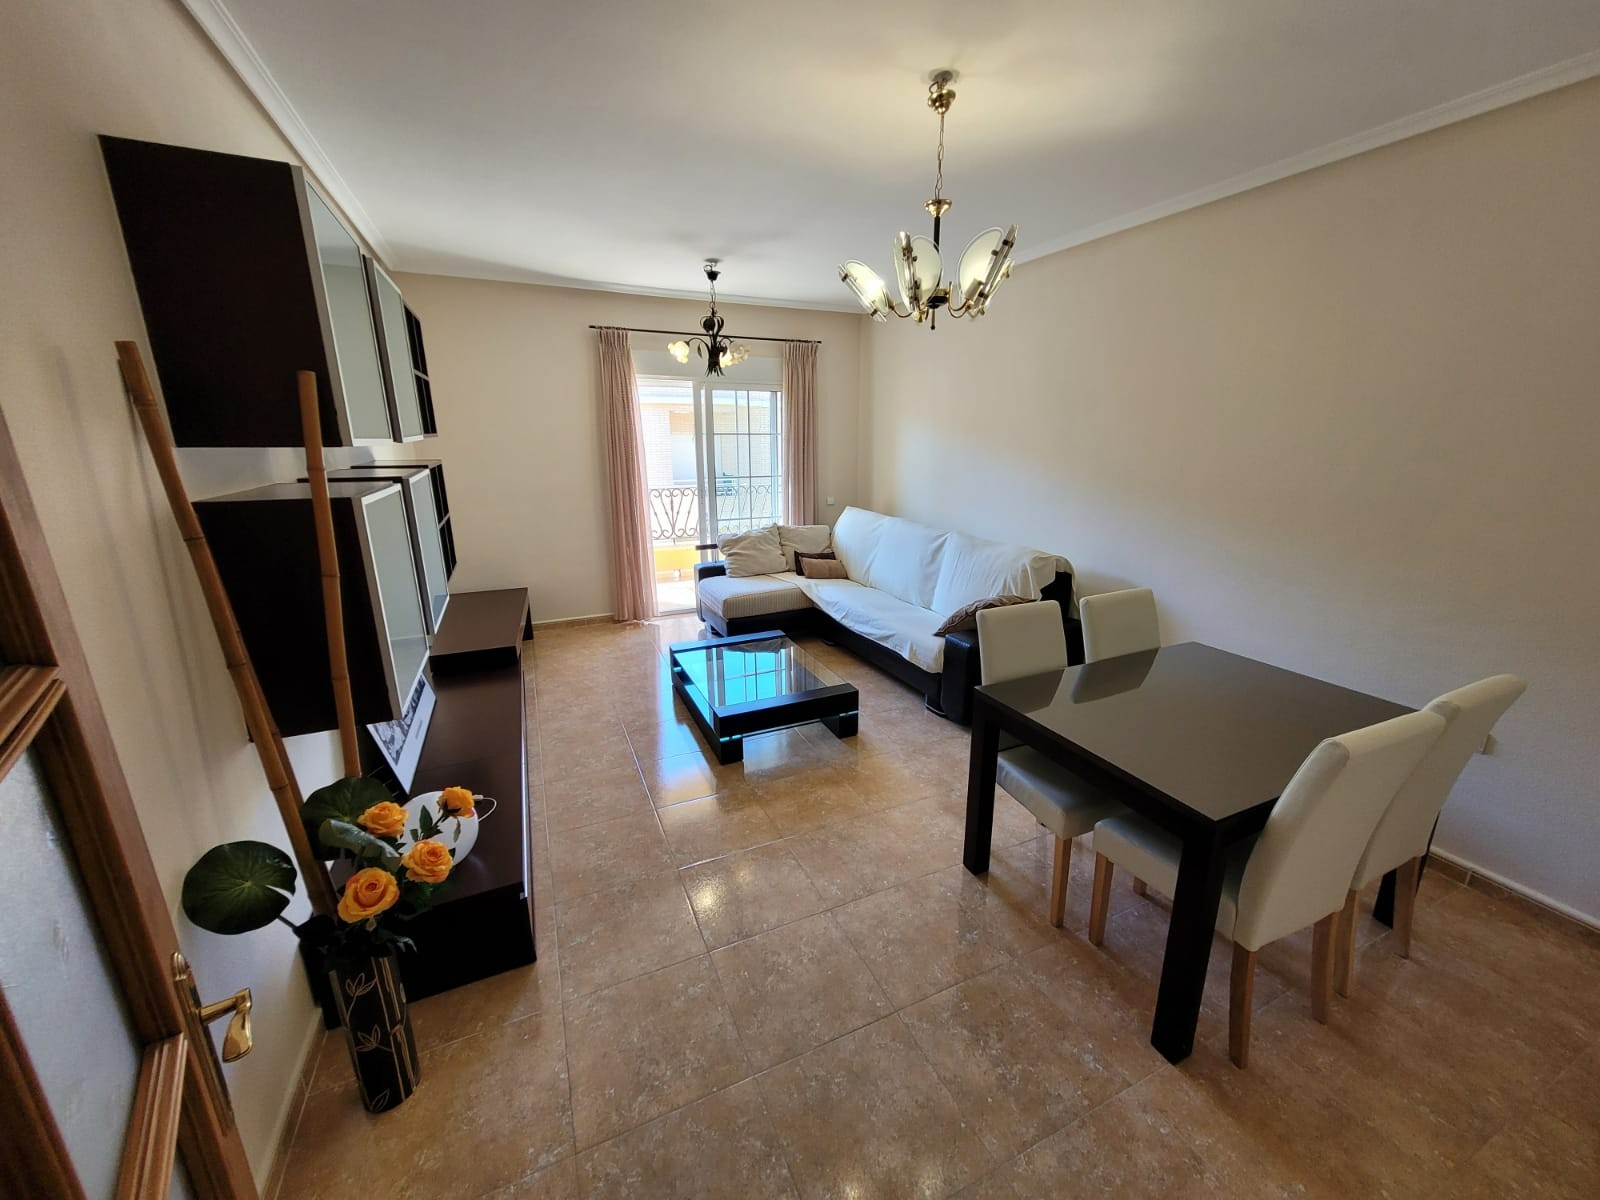 For sale: 3 bedroom apartment / flat in Almoradí, Costa Blanca